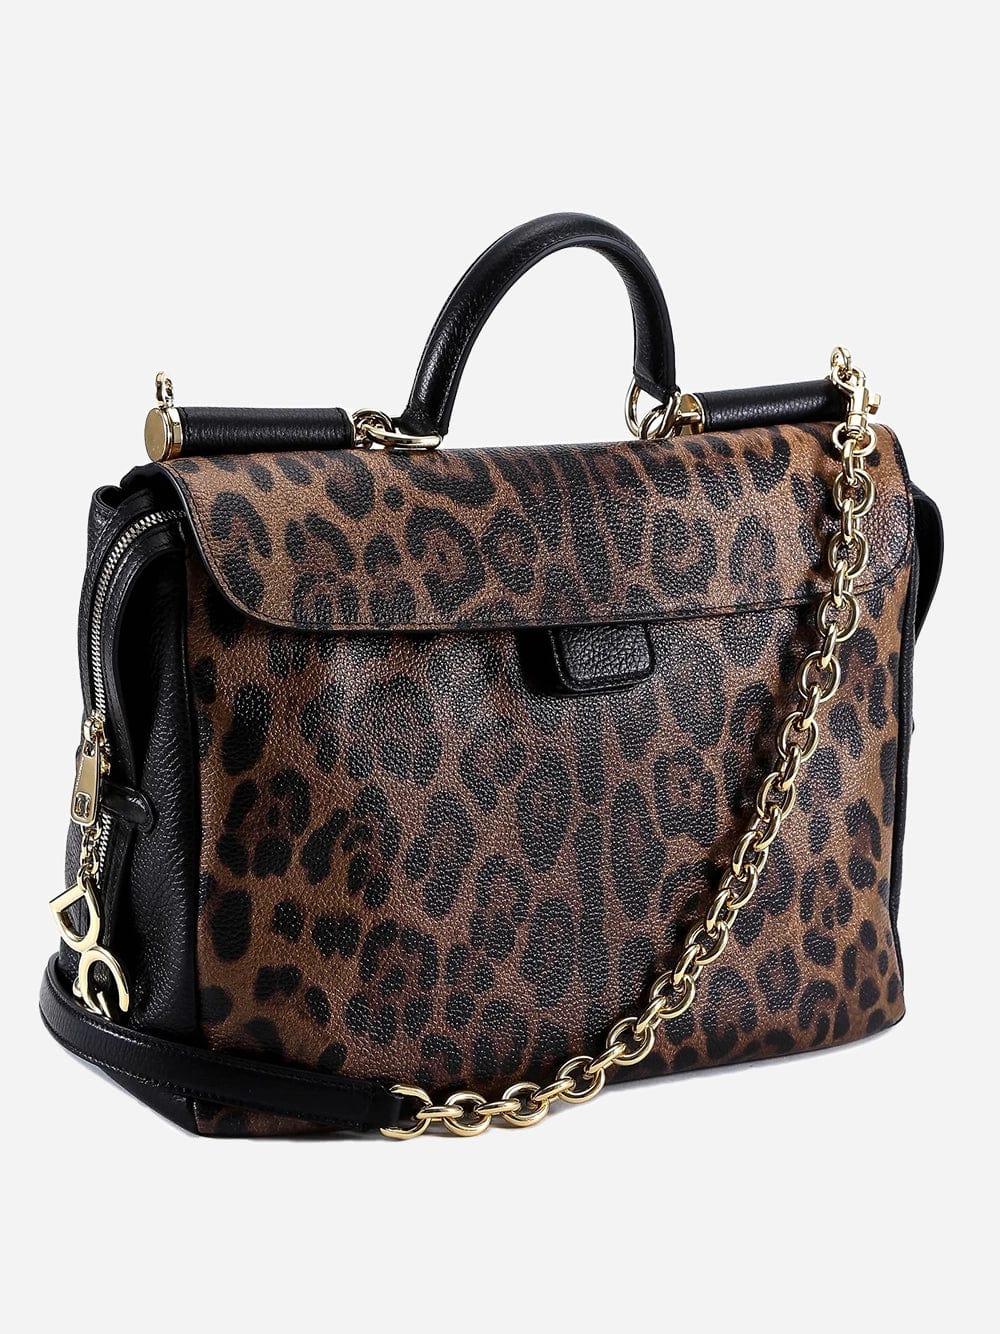 Dolce & Gabbana Sicily Leopard Print Leather Tote Bag